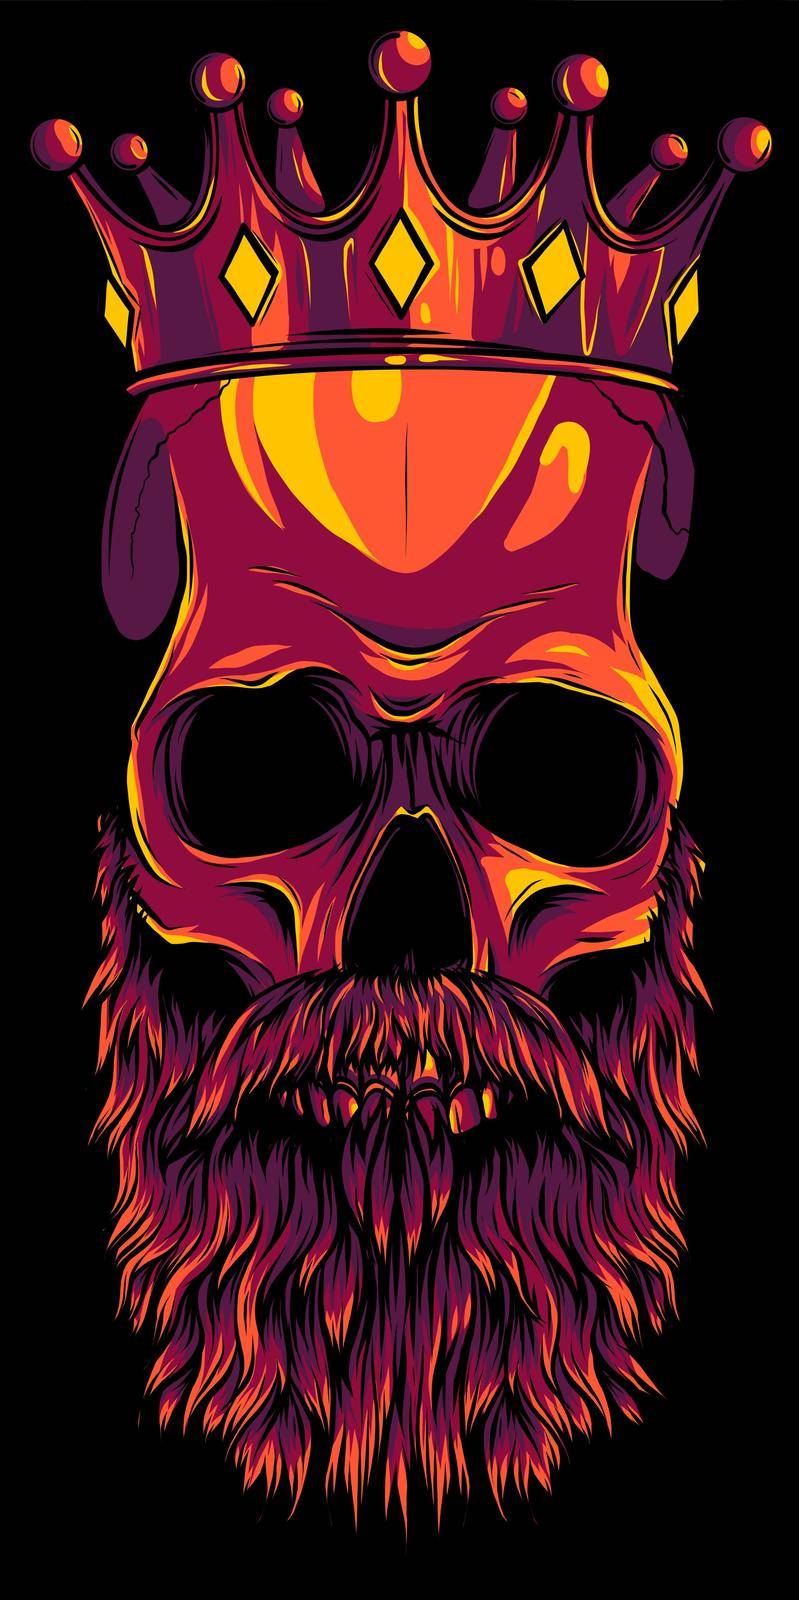 illustration of king skull with beard